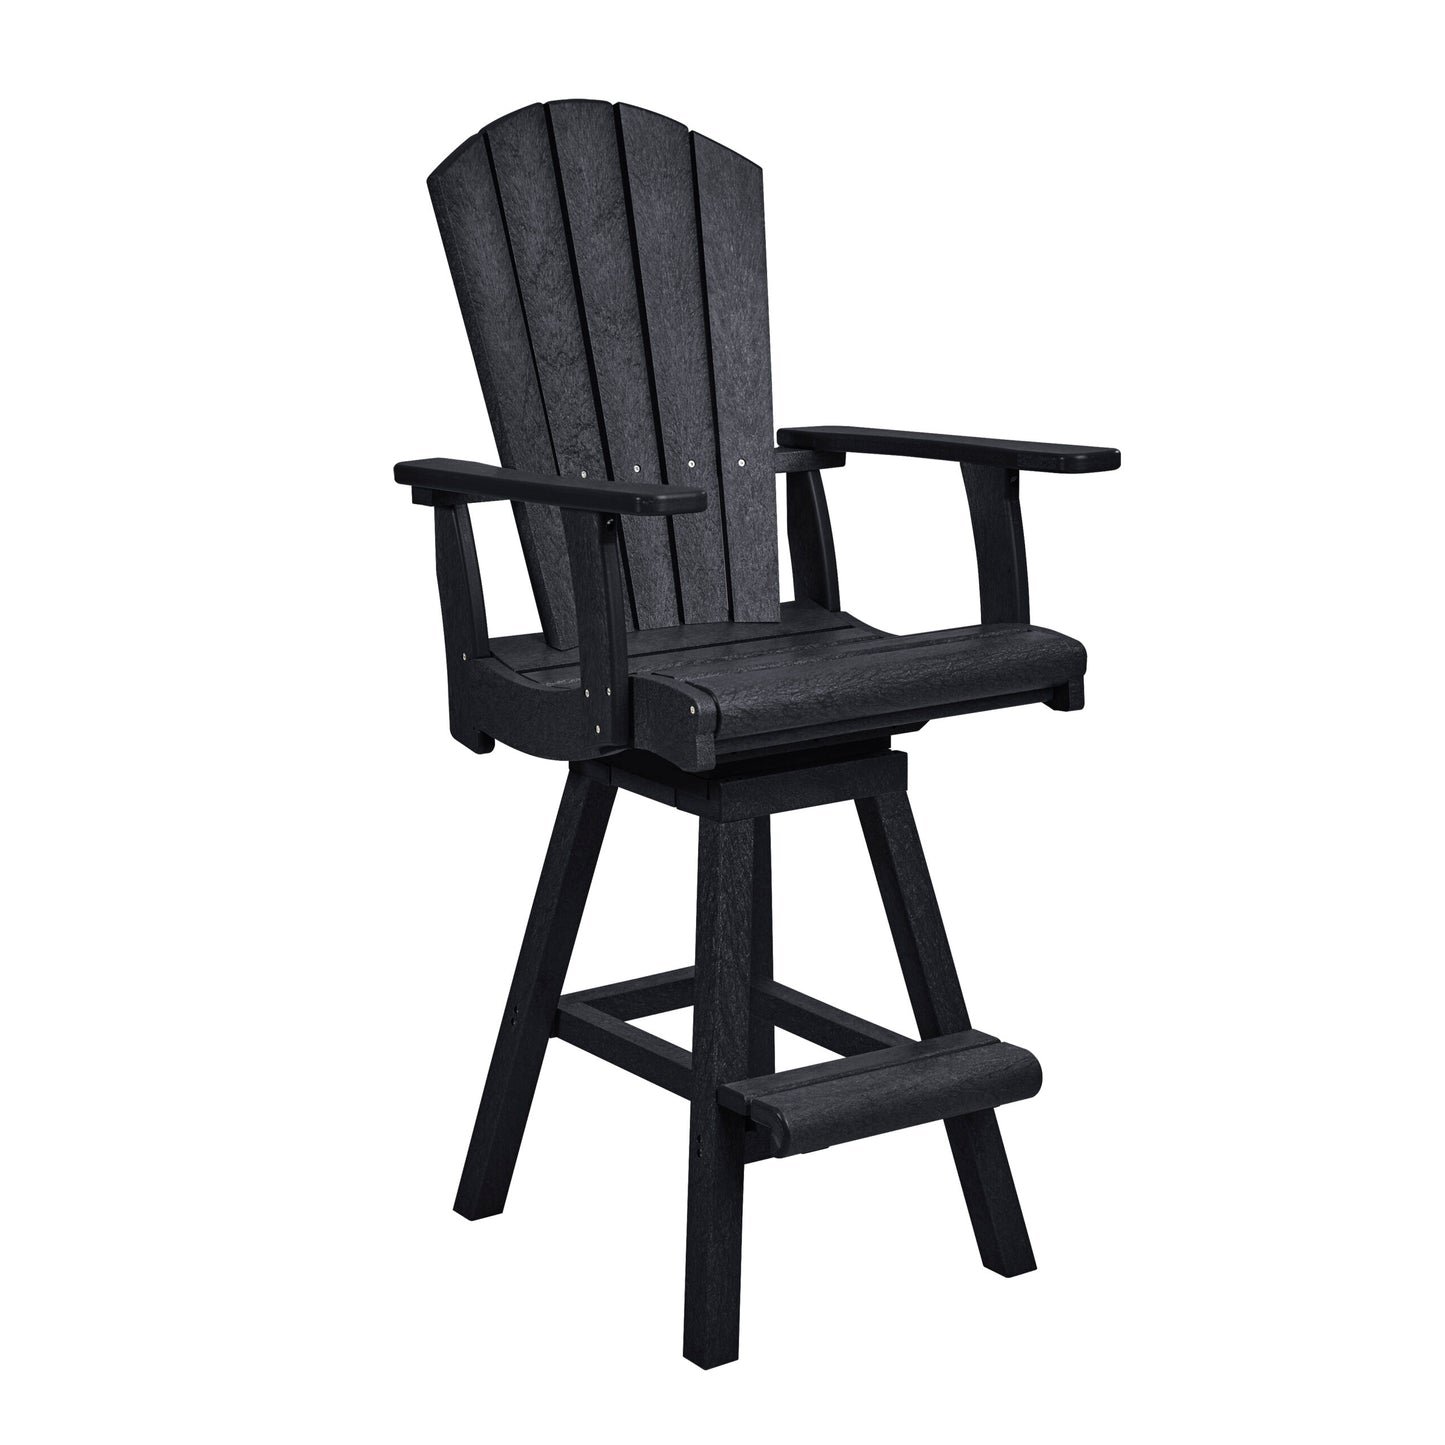 CR Plastics C25 Swivel Pub Arm Chair